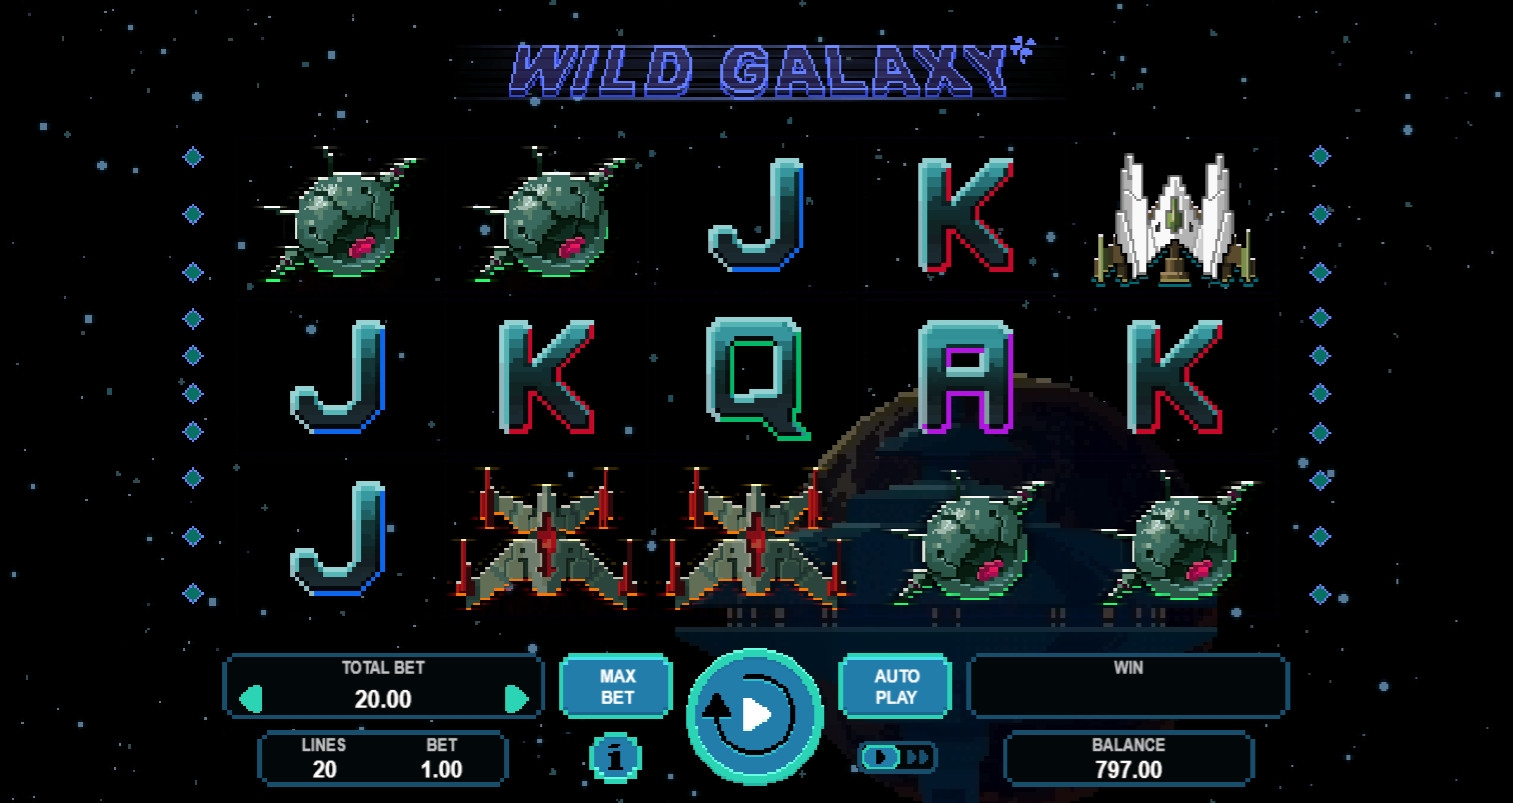 Wild Galaxy (Wild Galaxy) from category Slots